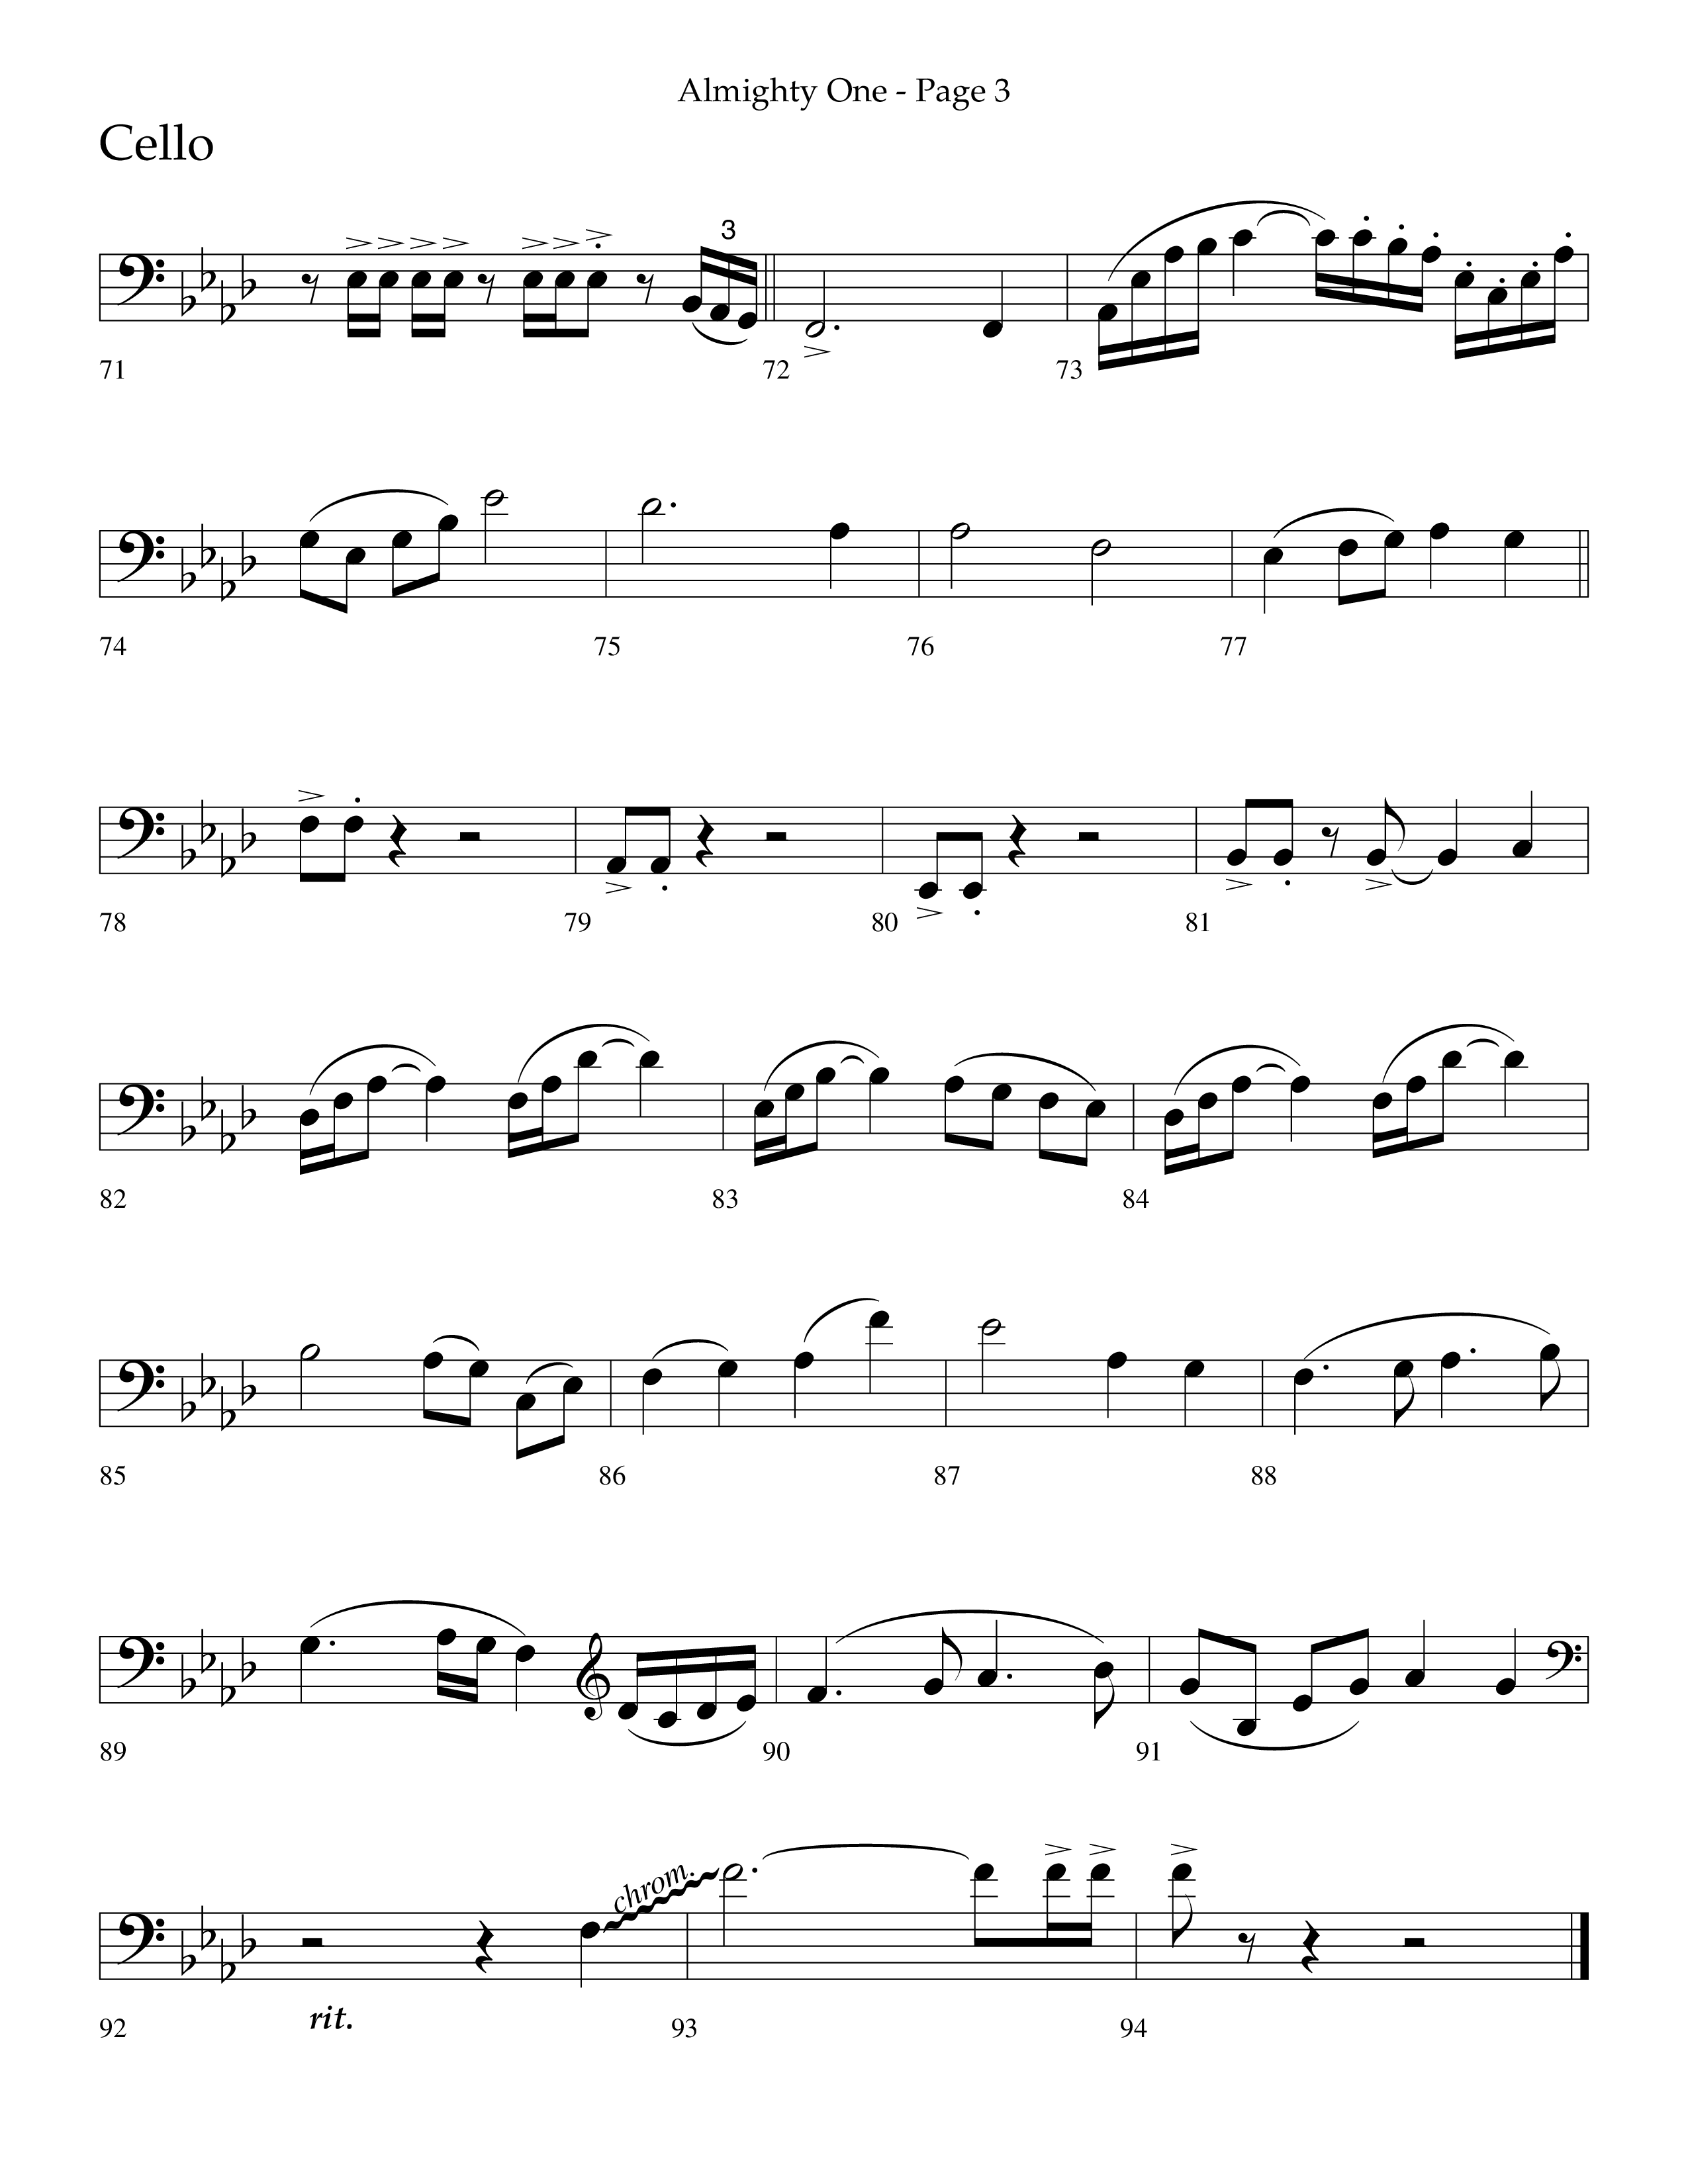 Almighty One (Choral Anthem SATB) Cello (Lifeway Choral / Arr. Bradley Knight)